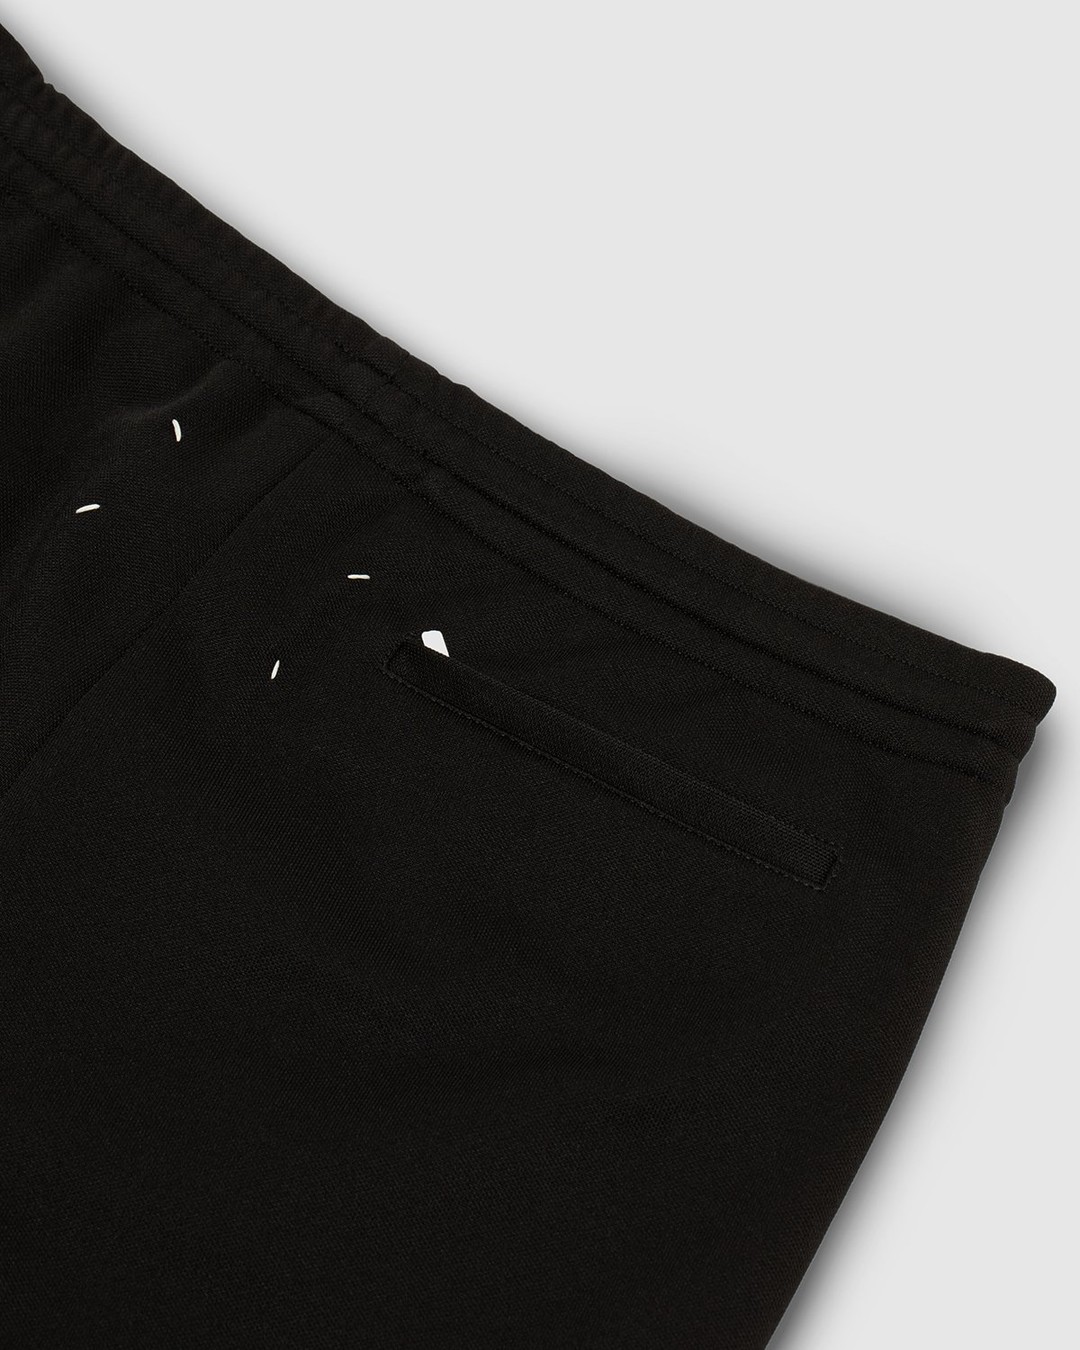 Maison Margiela – Track Pants - Pants - Black - Image 4